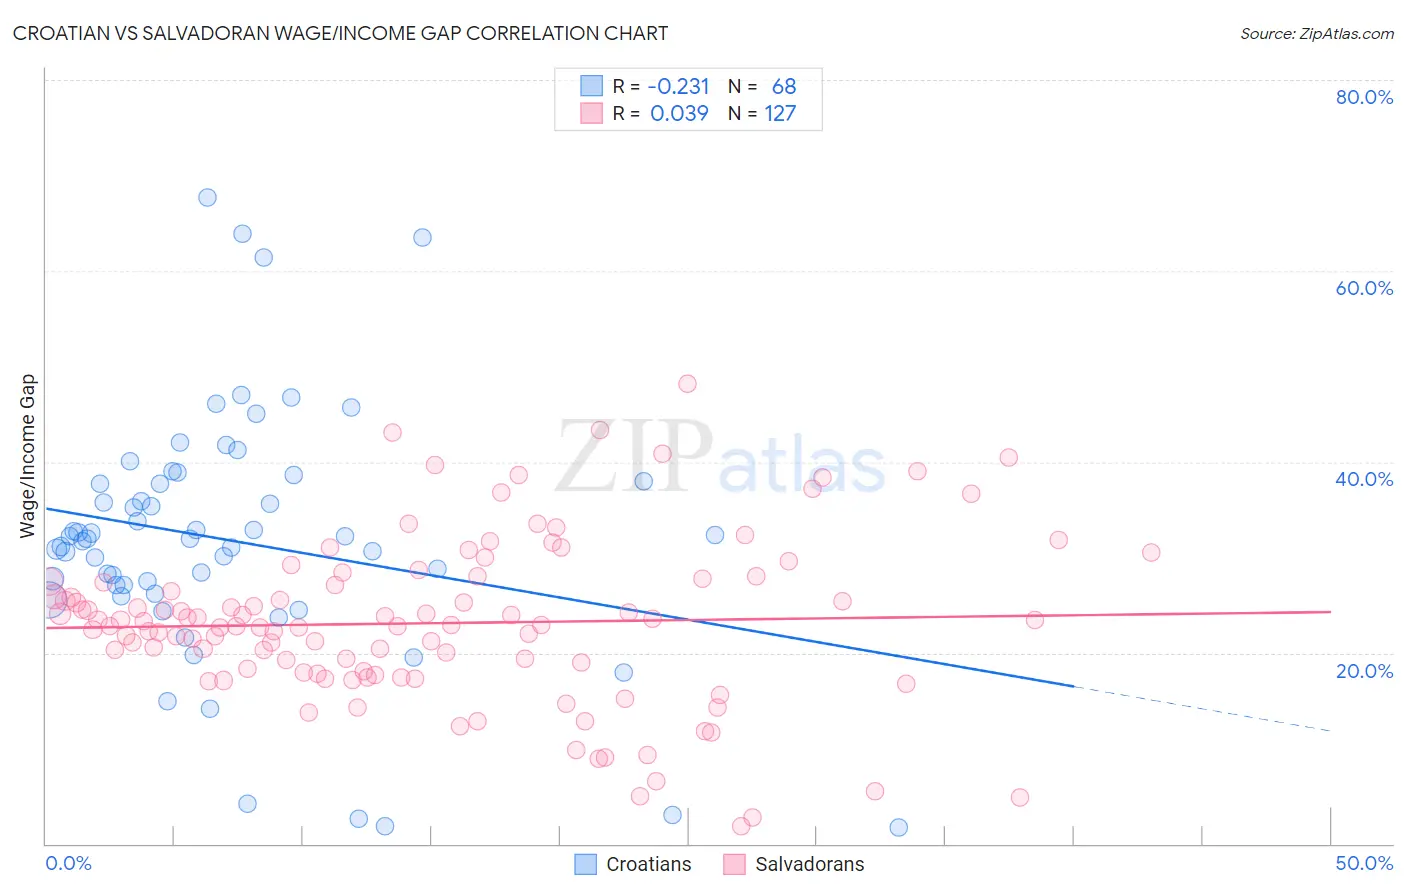 Croatian vs Salvadoran Wage/Income Gap